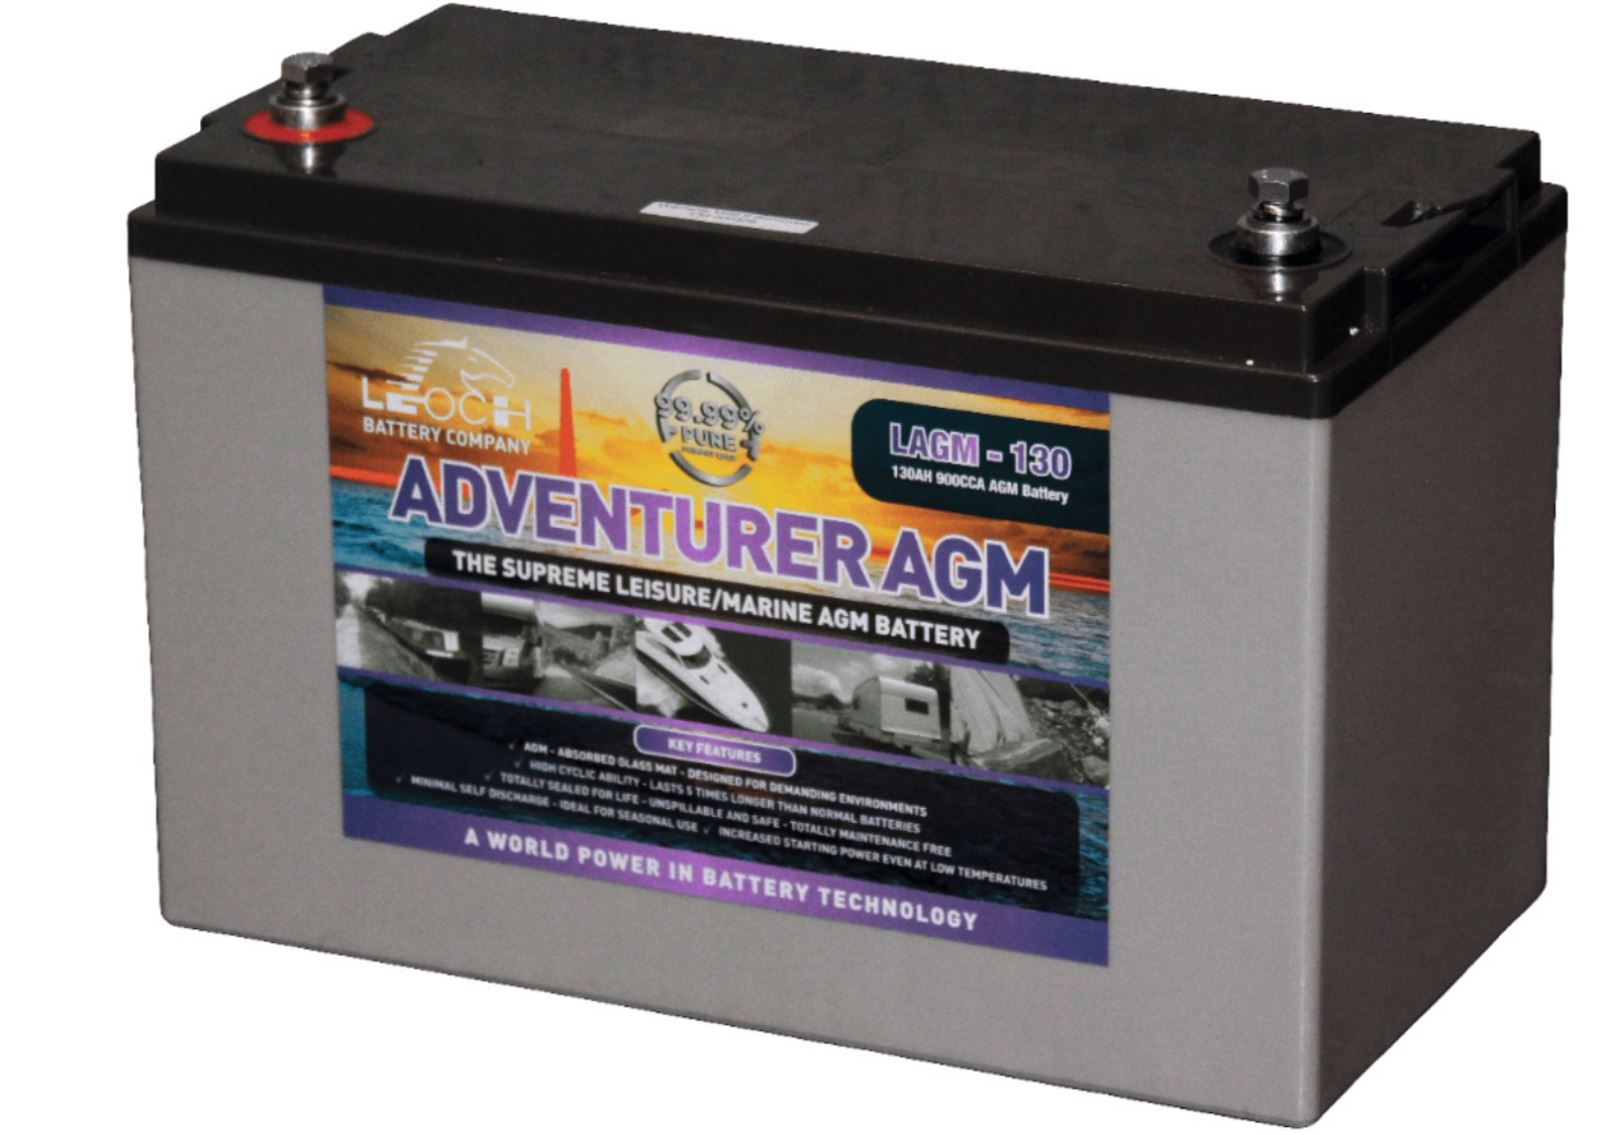 An Adventure AGm leisure battery